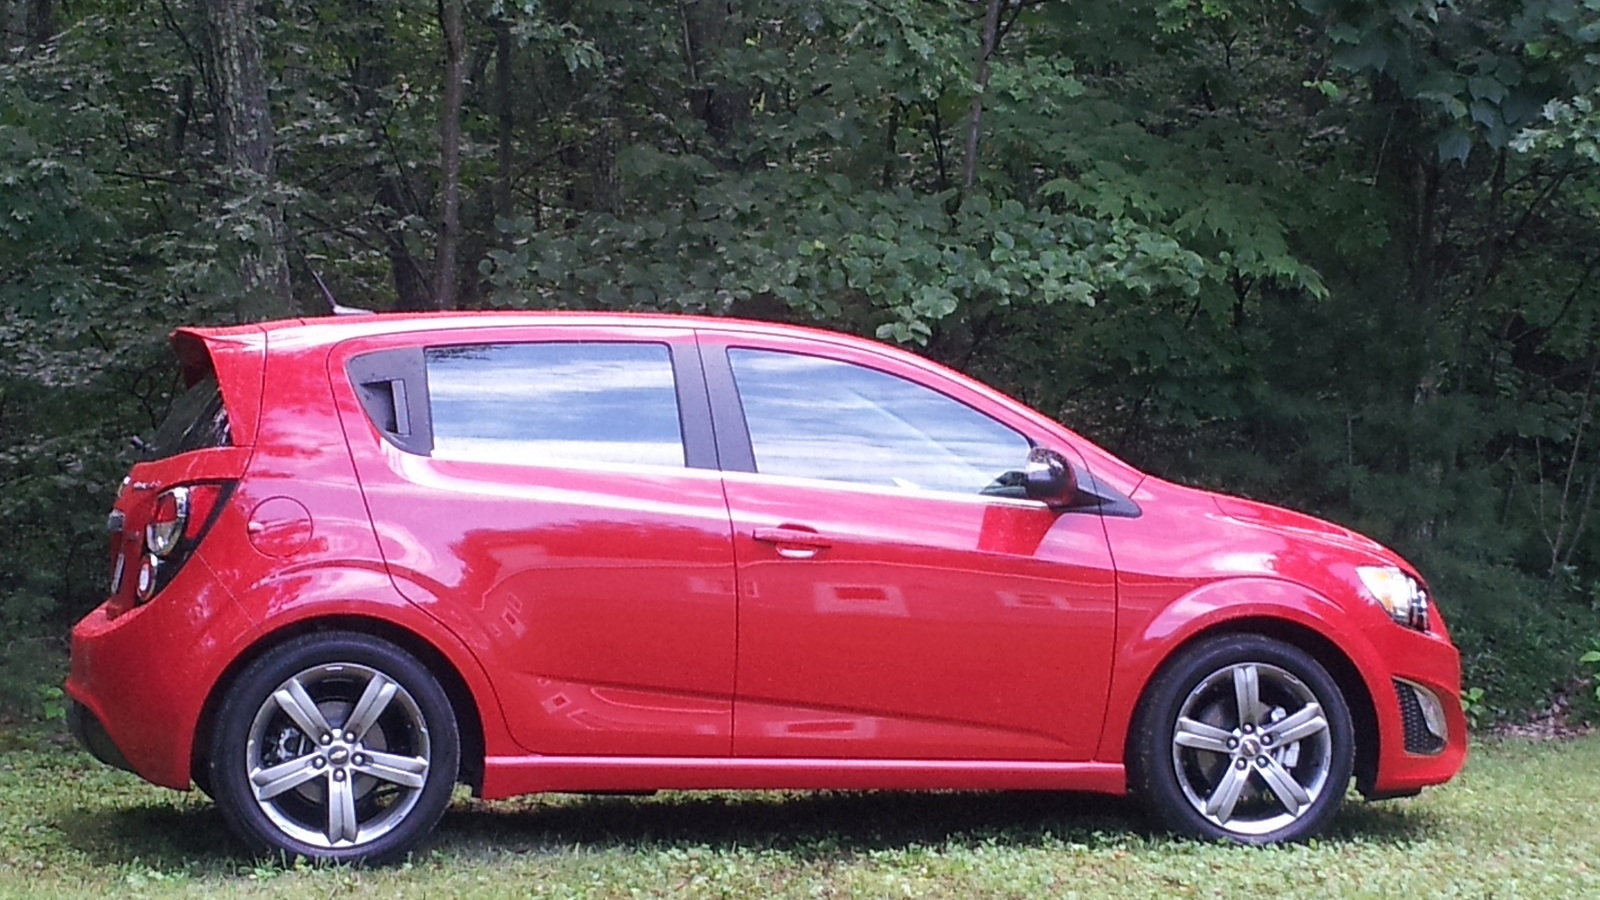 2013 Chevrolet Sonic RS, Catskill Mountains, NY, July 2013